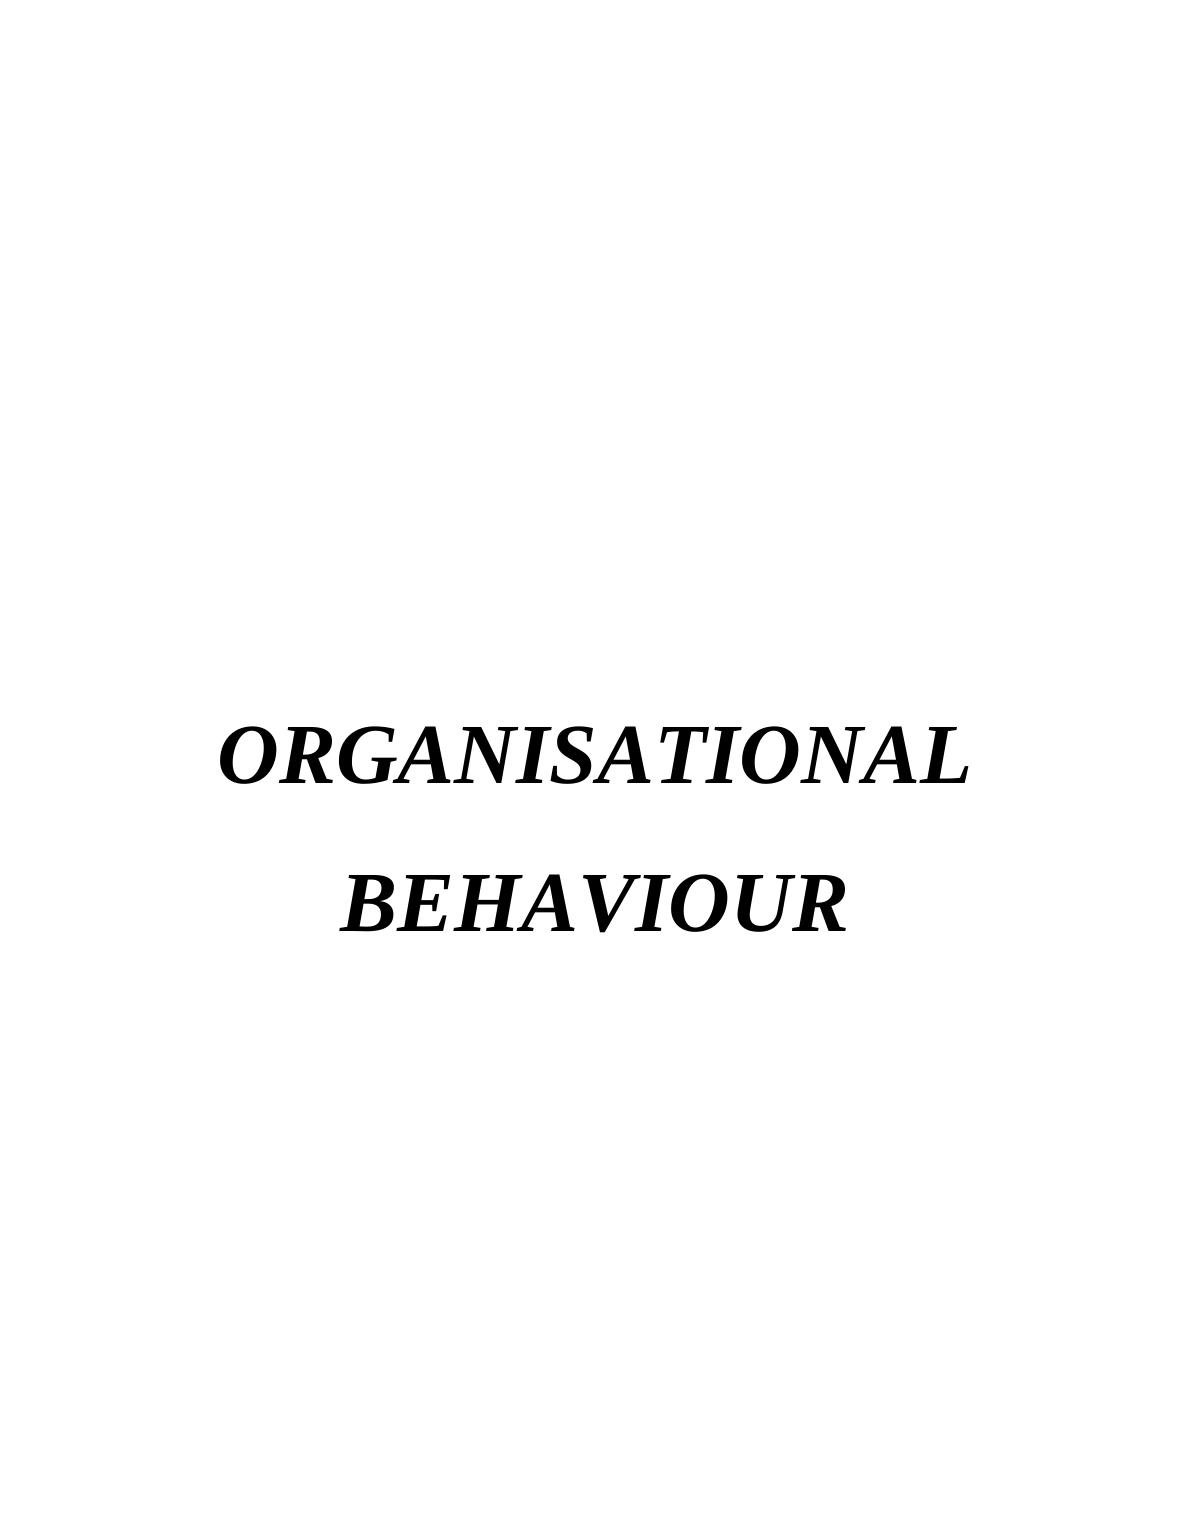 Organisational Behaviour - A David & Co Limited (pdf)_1